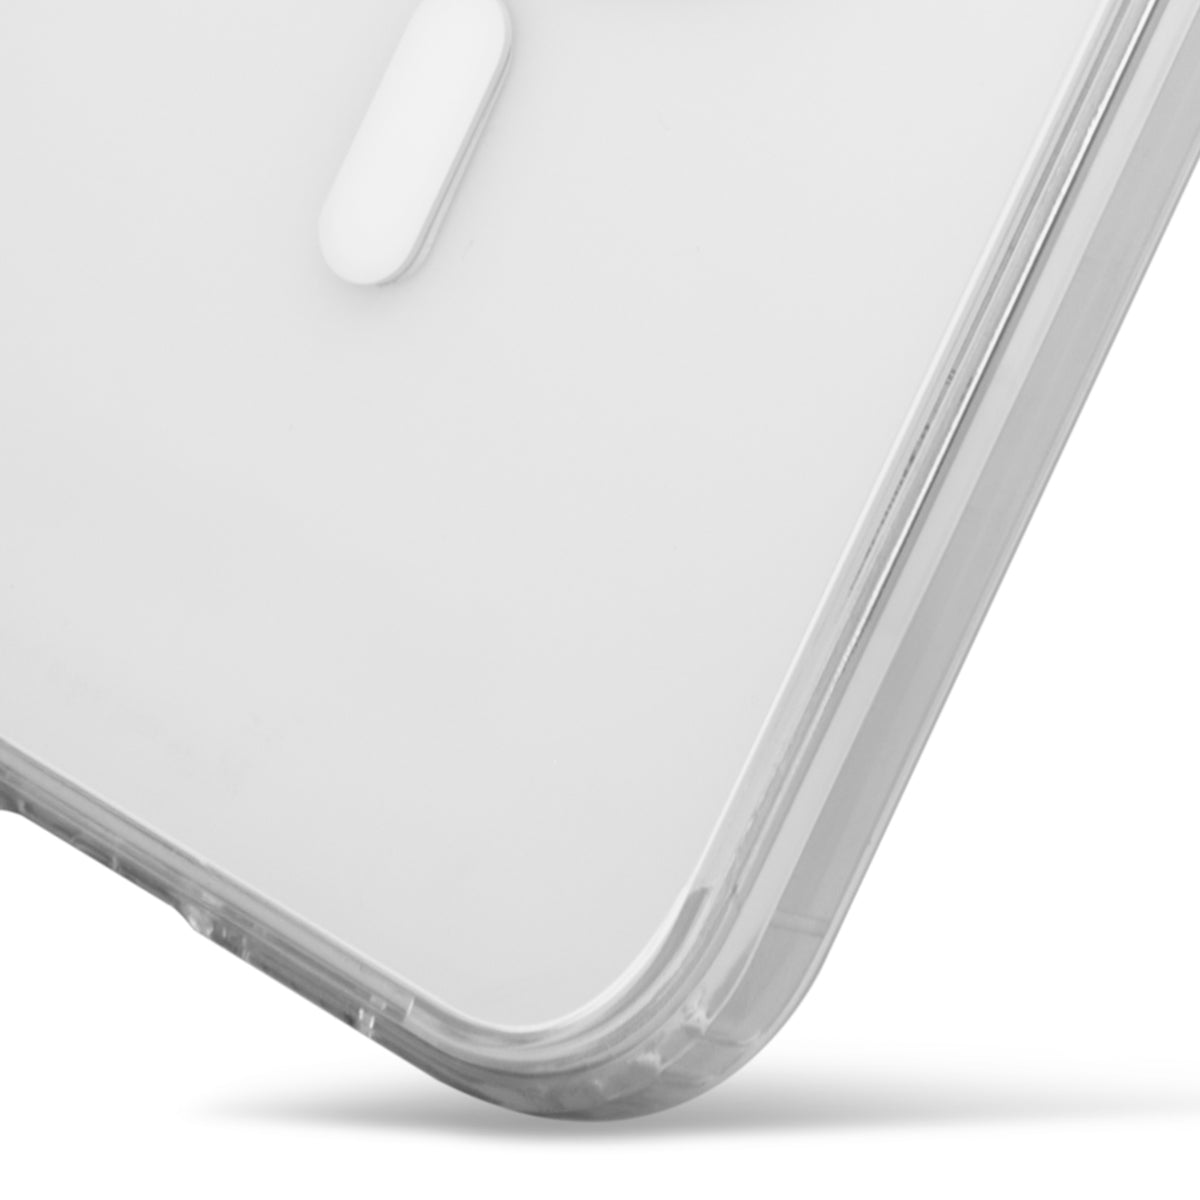 Showcase Slim Halo - iPhone 15 Plus White w/ MagSafe Cases